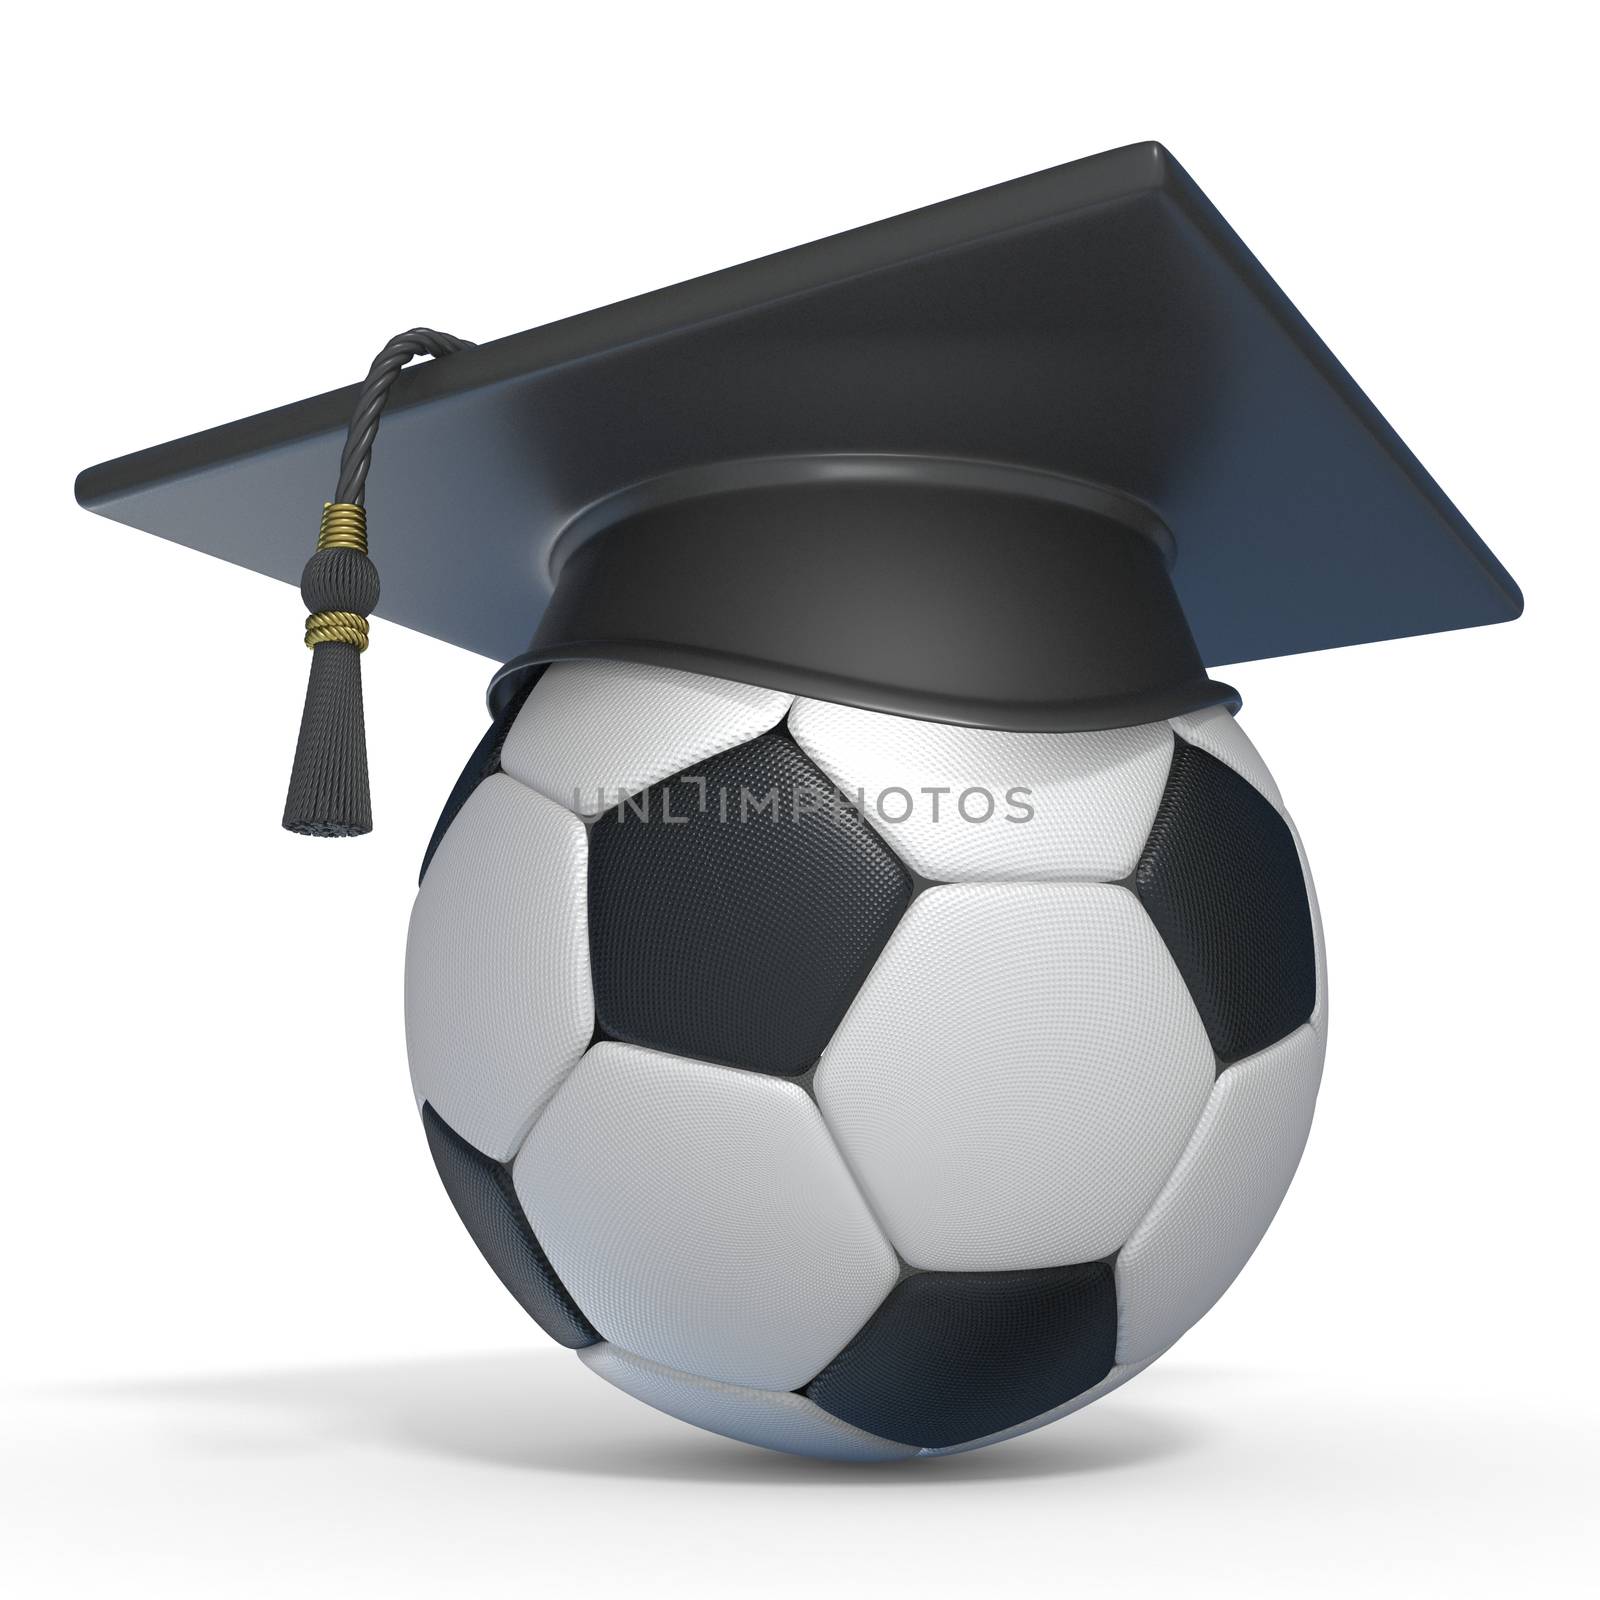 Graduation cap on football 3D render illustration on white background